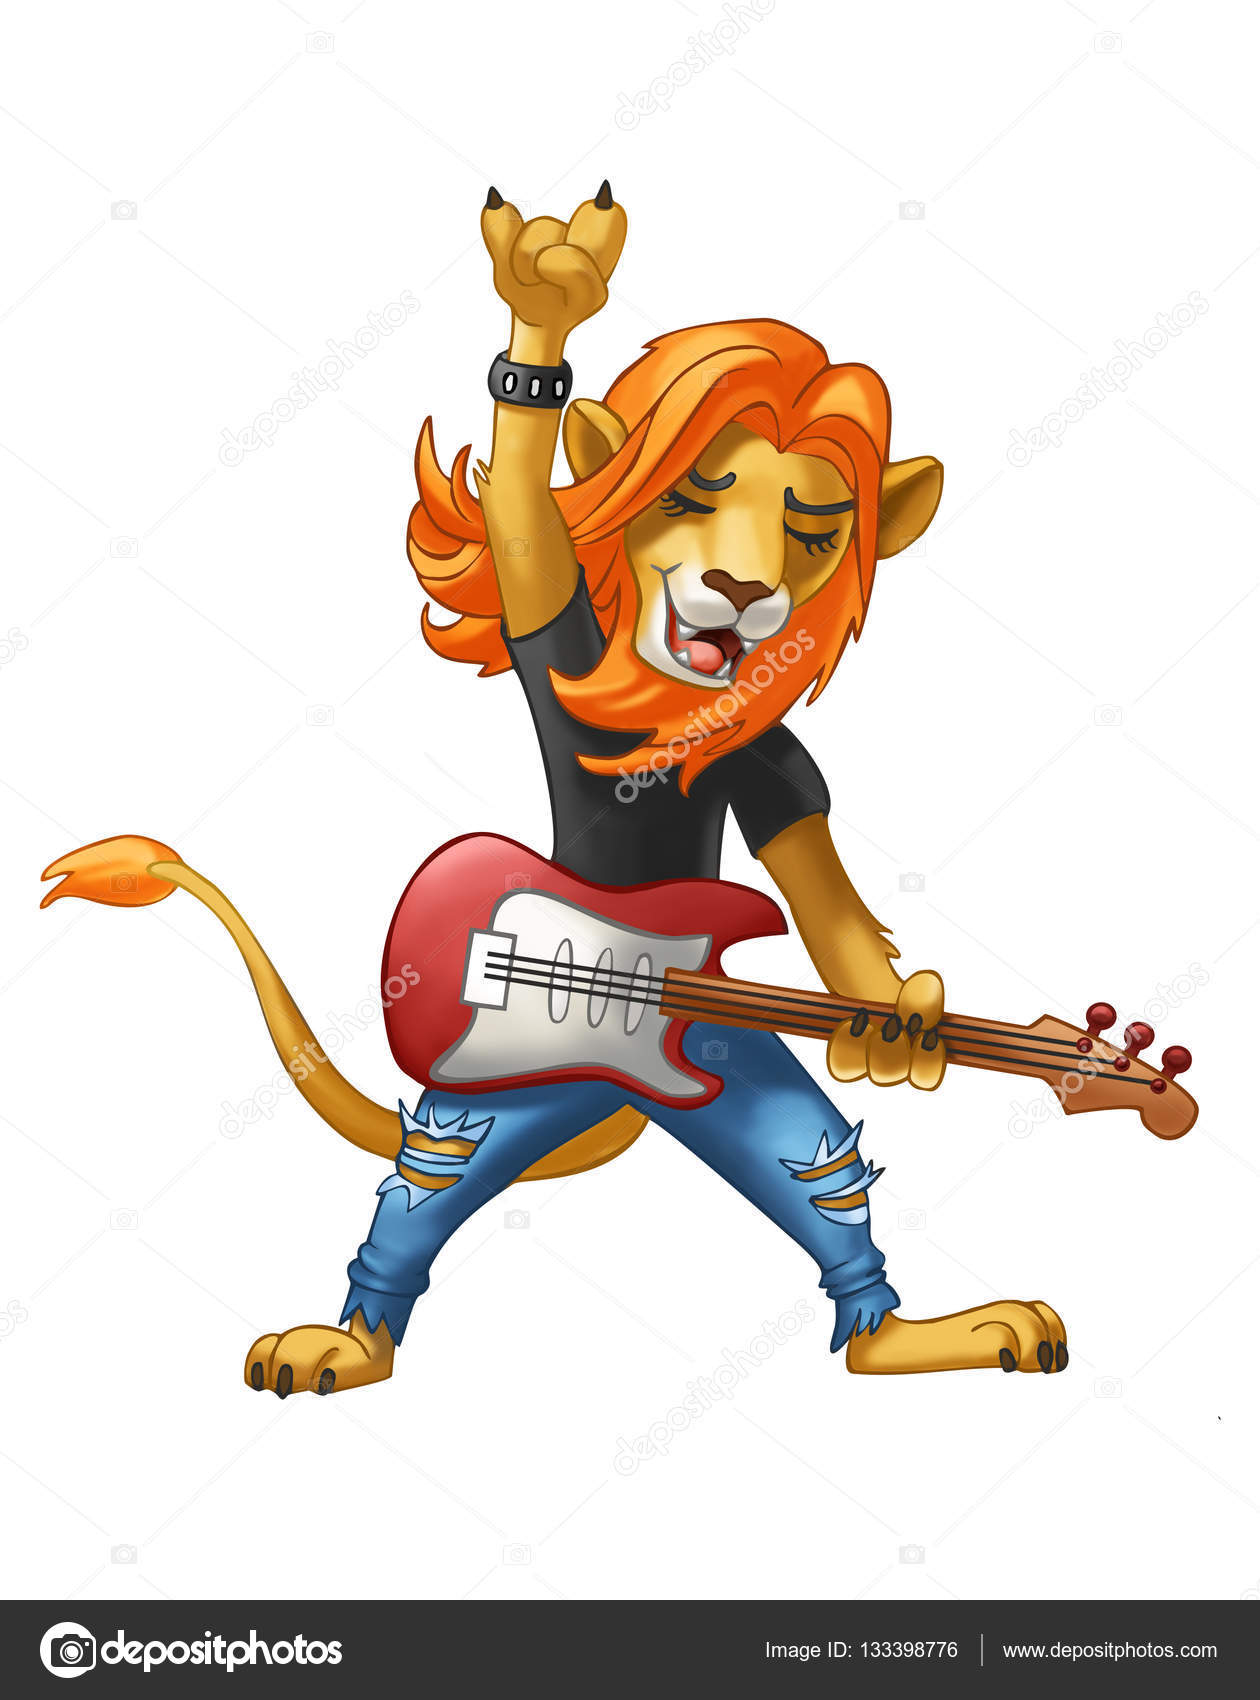 depositphotos_133398776-stock-photo-lion-rocker-with-a-guitar.jpg